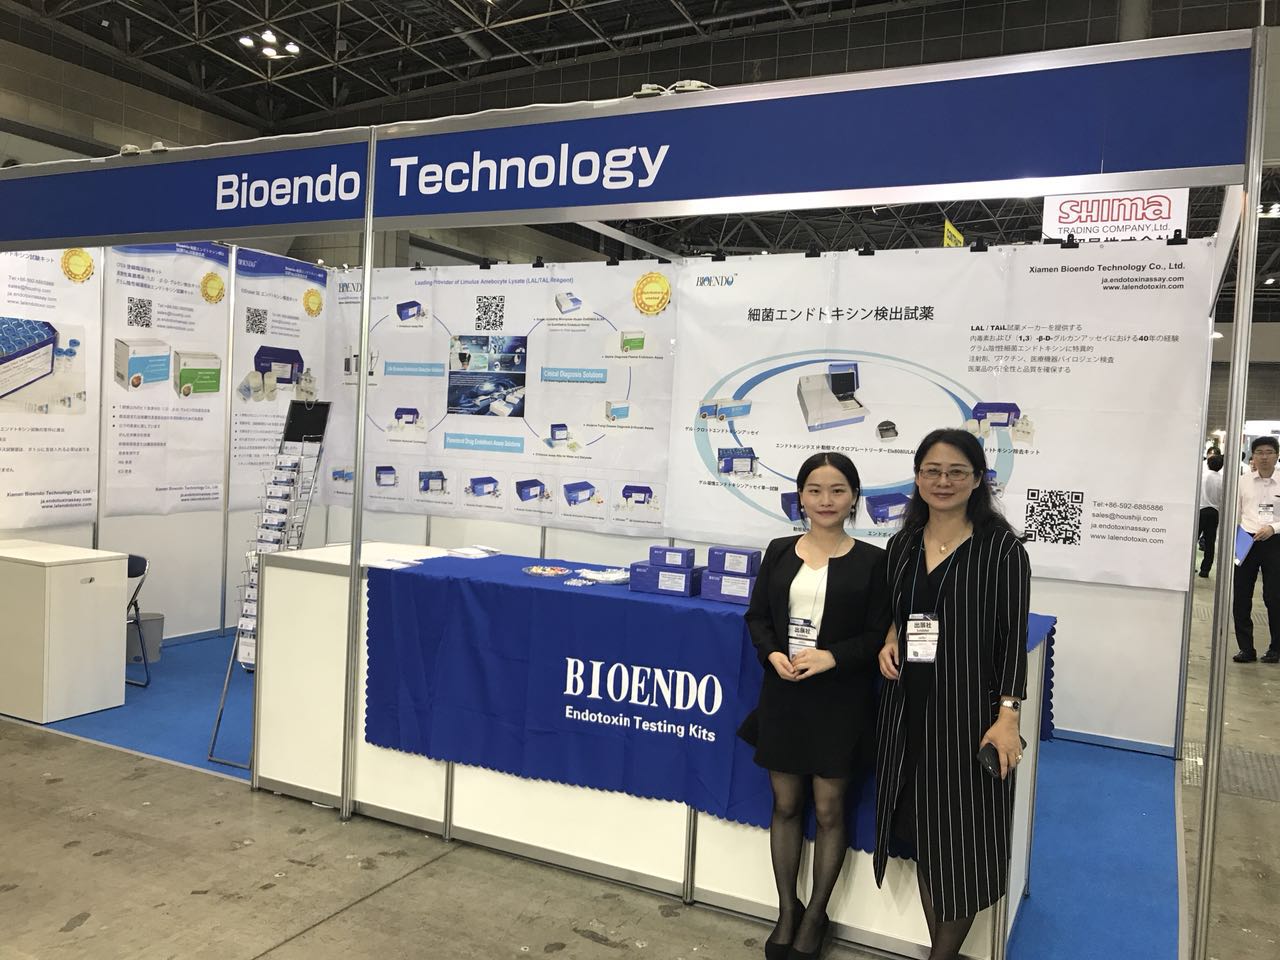 Bioendo は 2018 年 6 月 27 ～ 29 日に開催された In-PHARMA JAPAN に参加しました